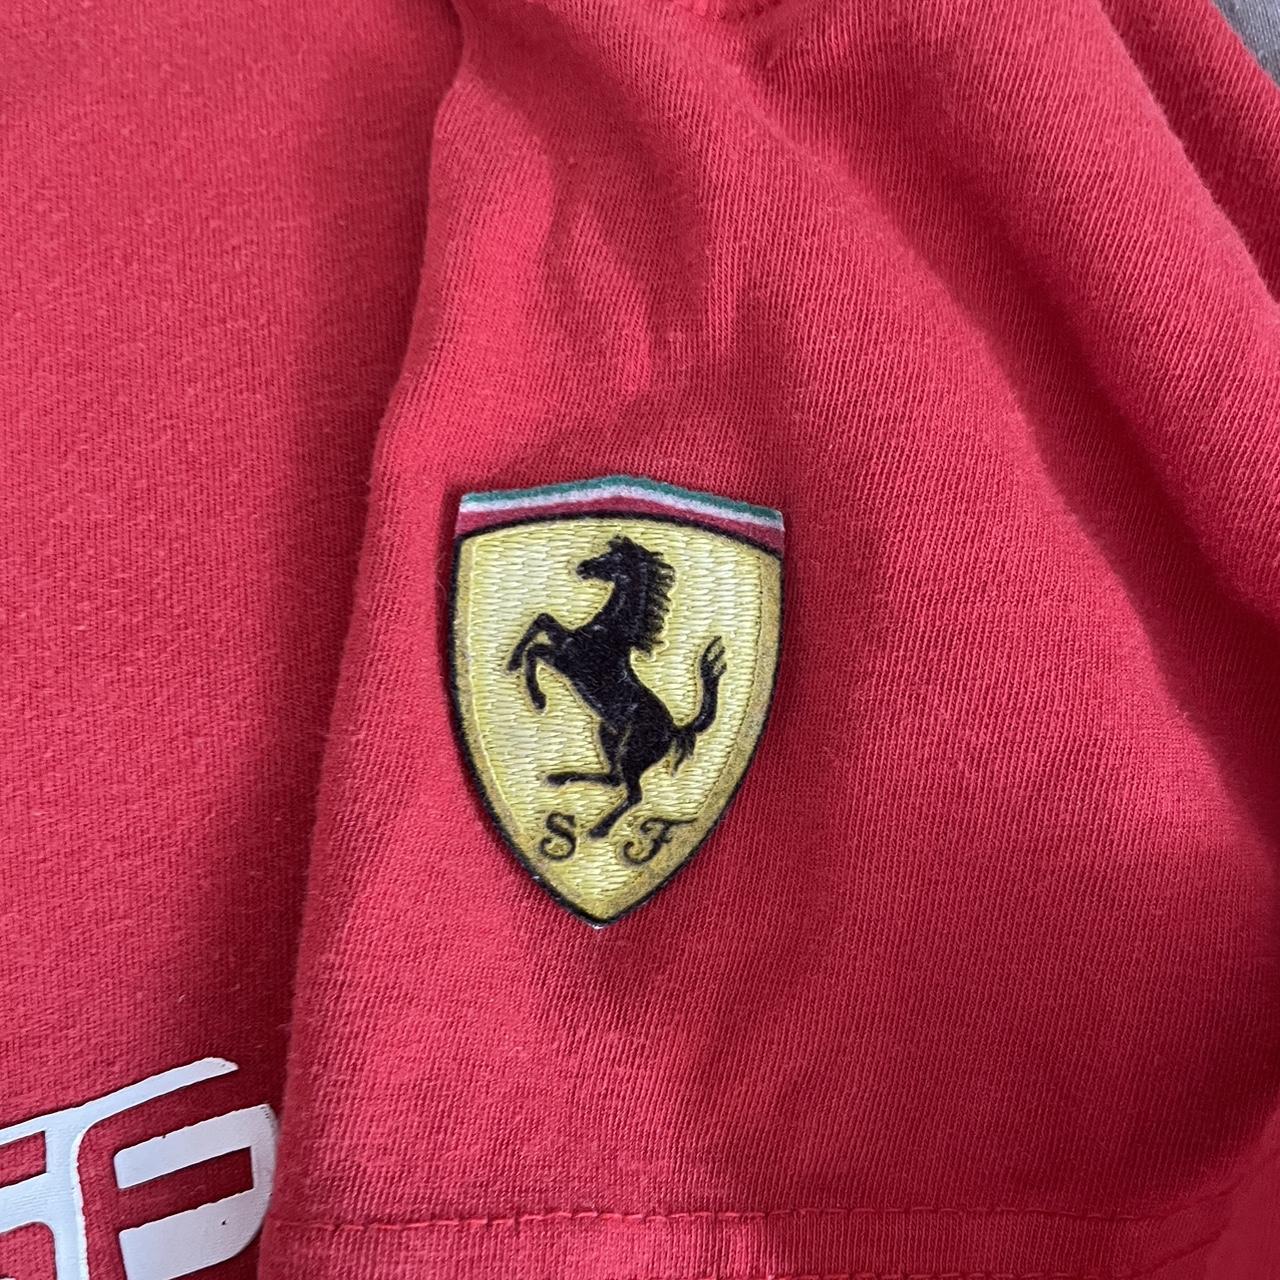 Vintage Ferrari red top - size medium - perfect... - Depop